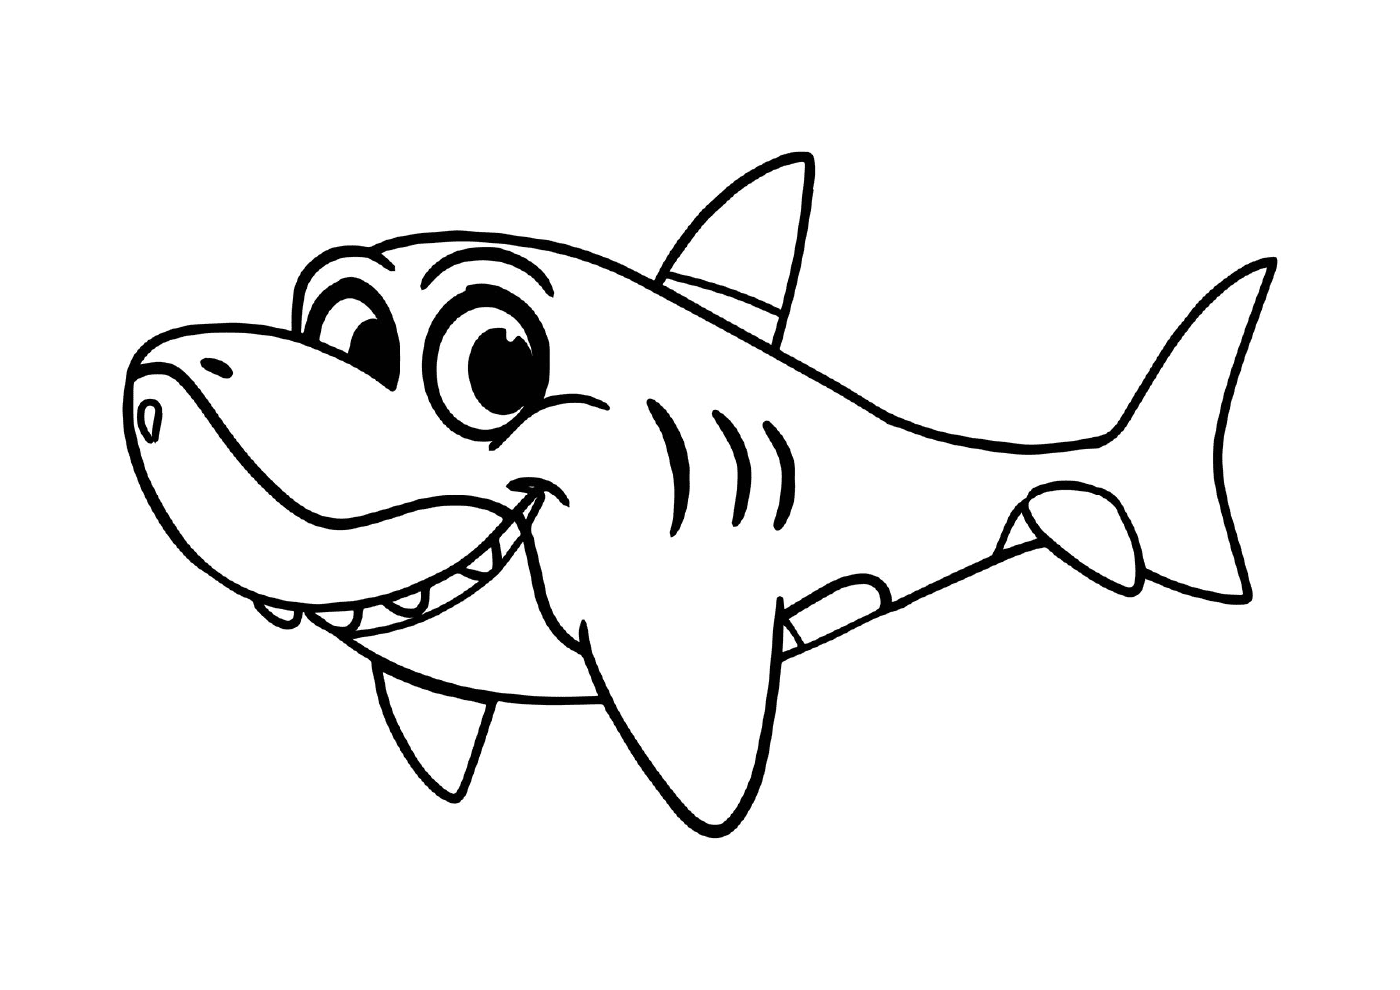  Facile squalo sorridente 